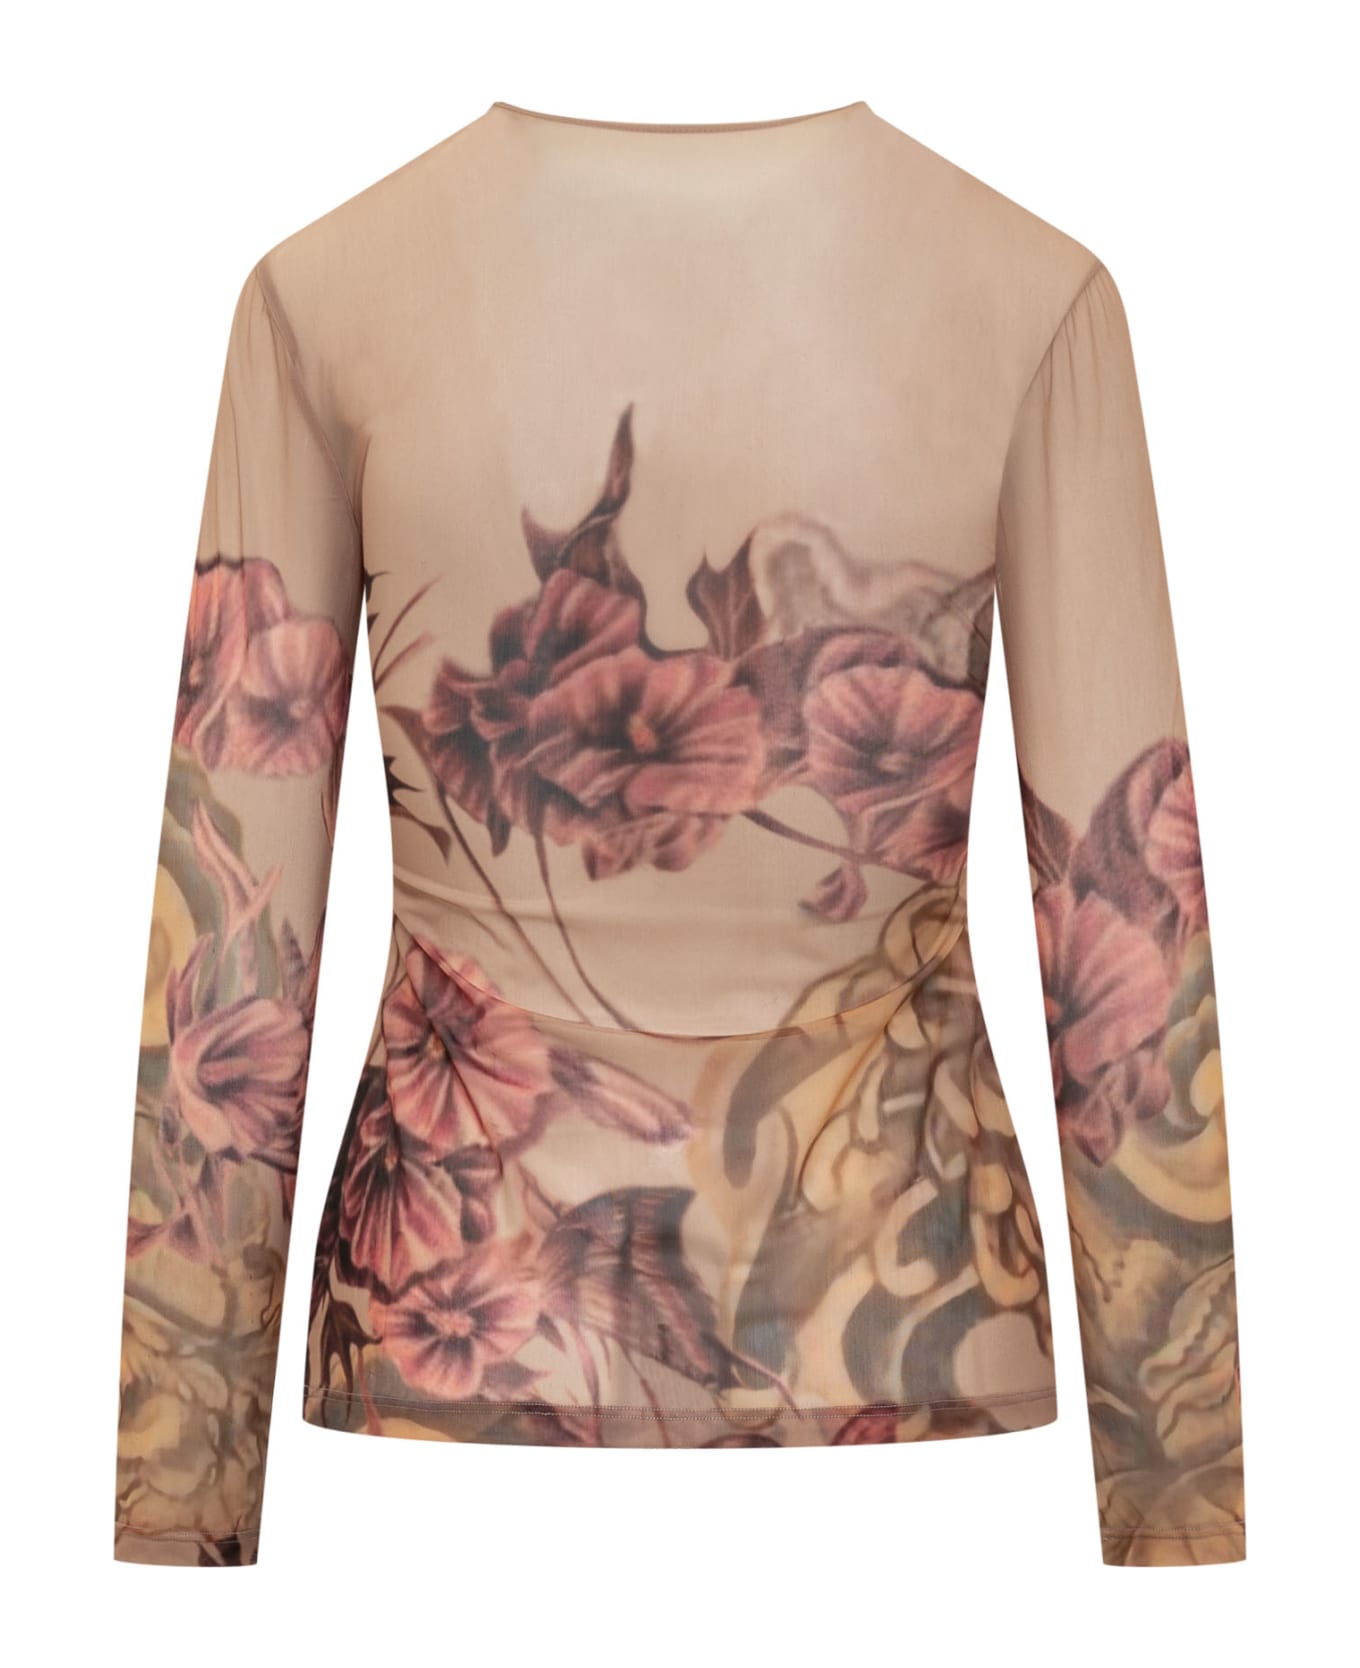 Alberta Ferretti T-shirt With Floral Print - FANTASIA ROSA